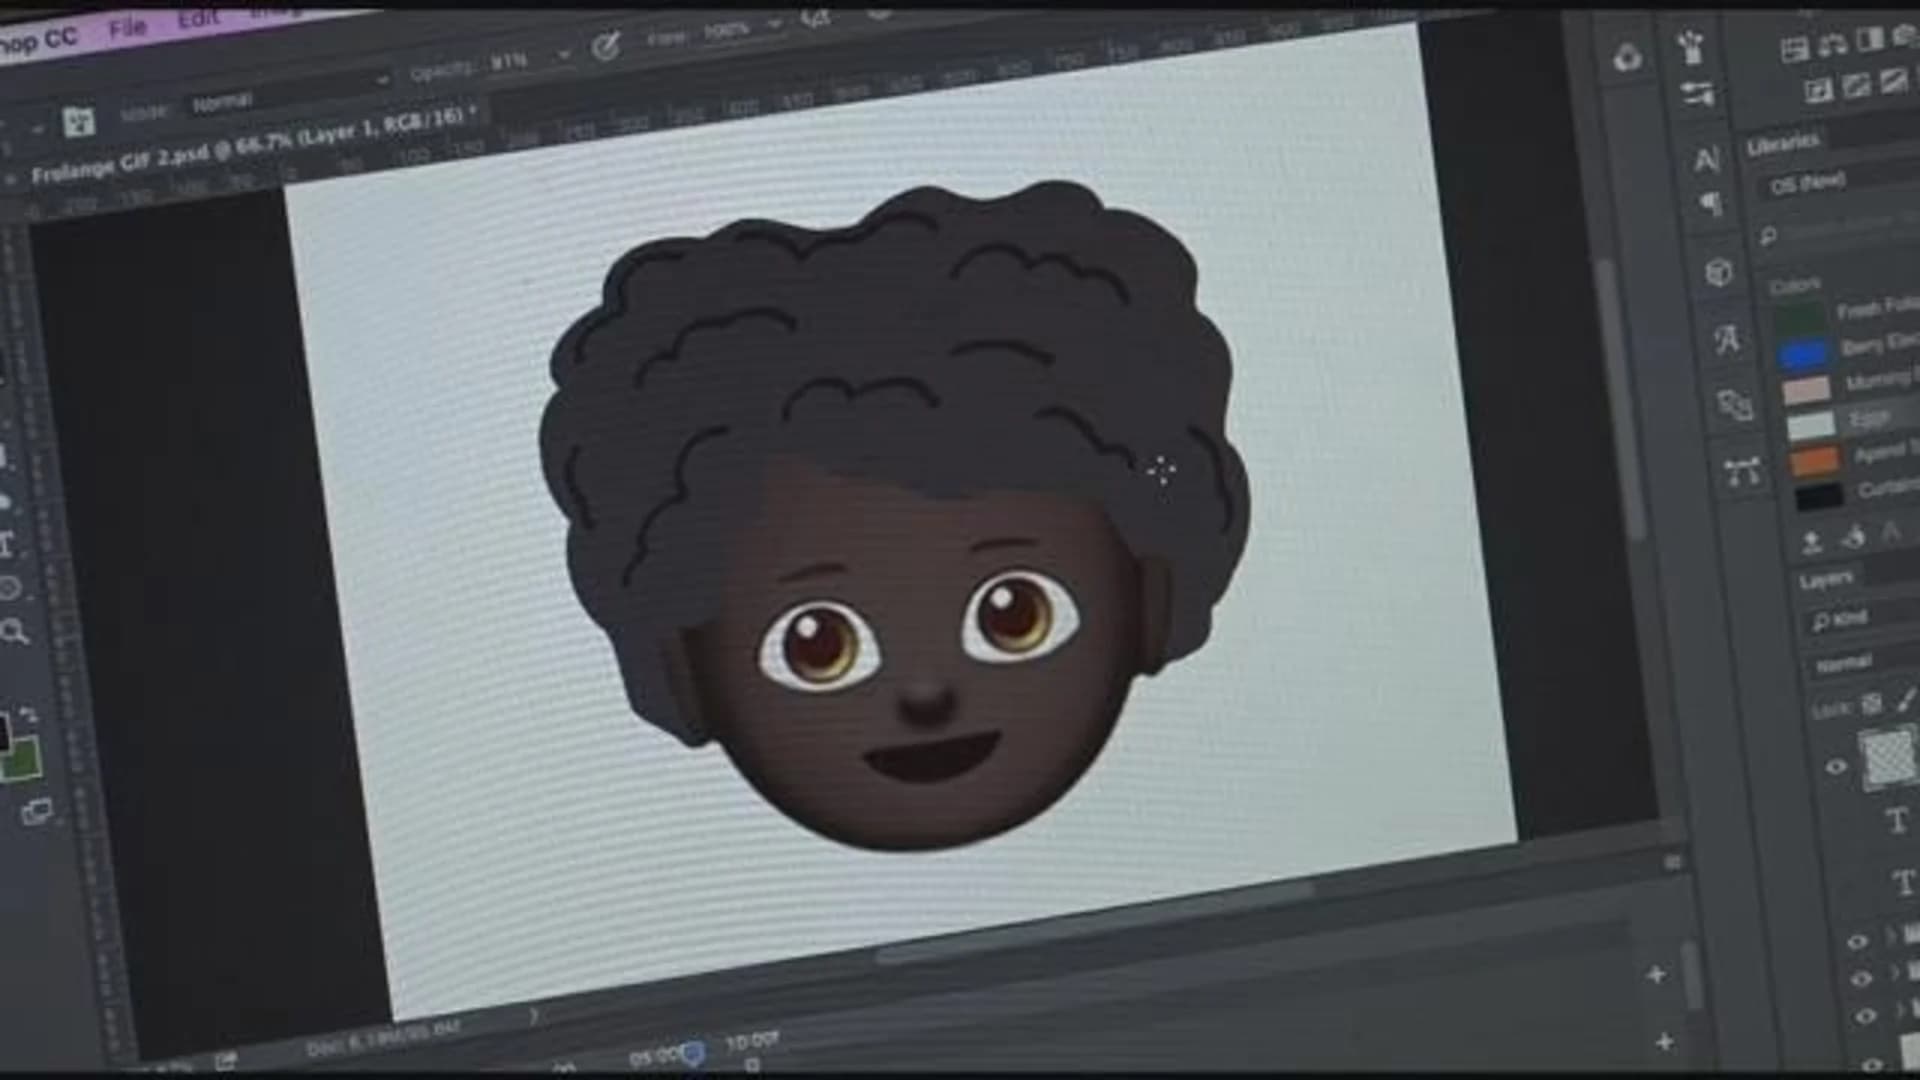 BK women create emoji designs in an effort to promote inclusiveness